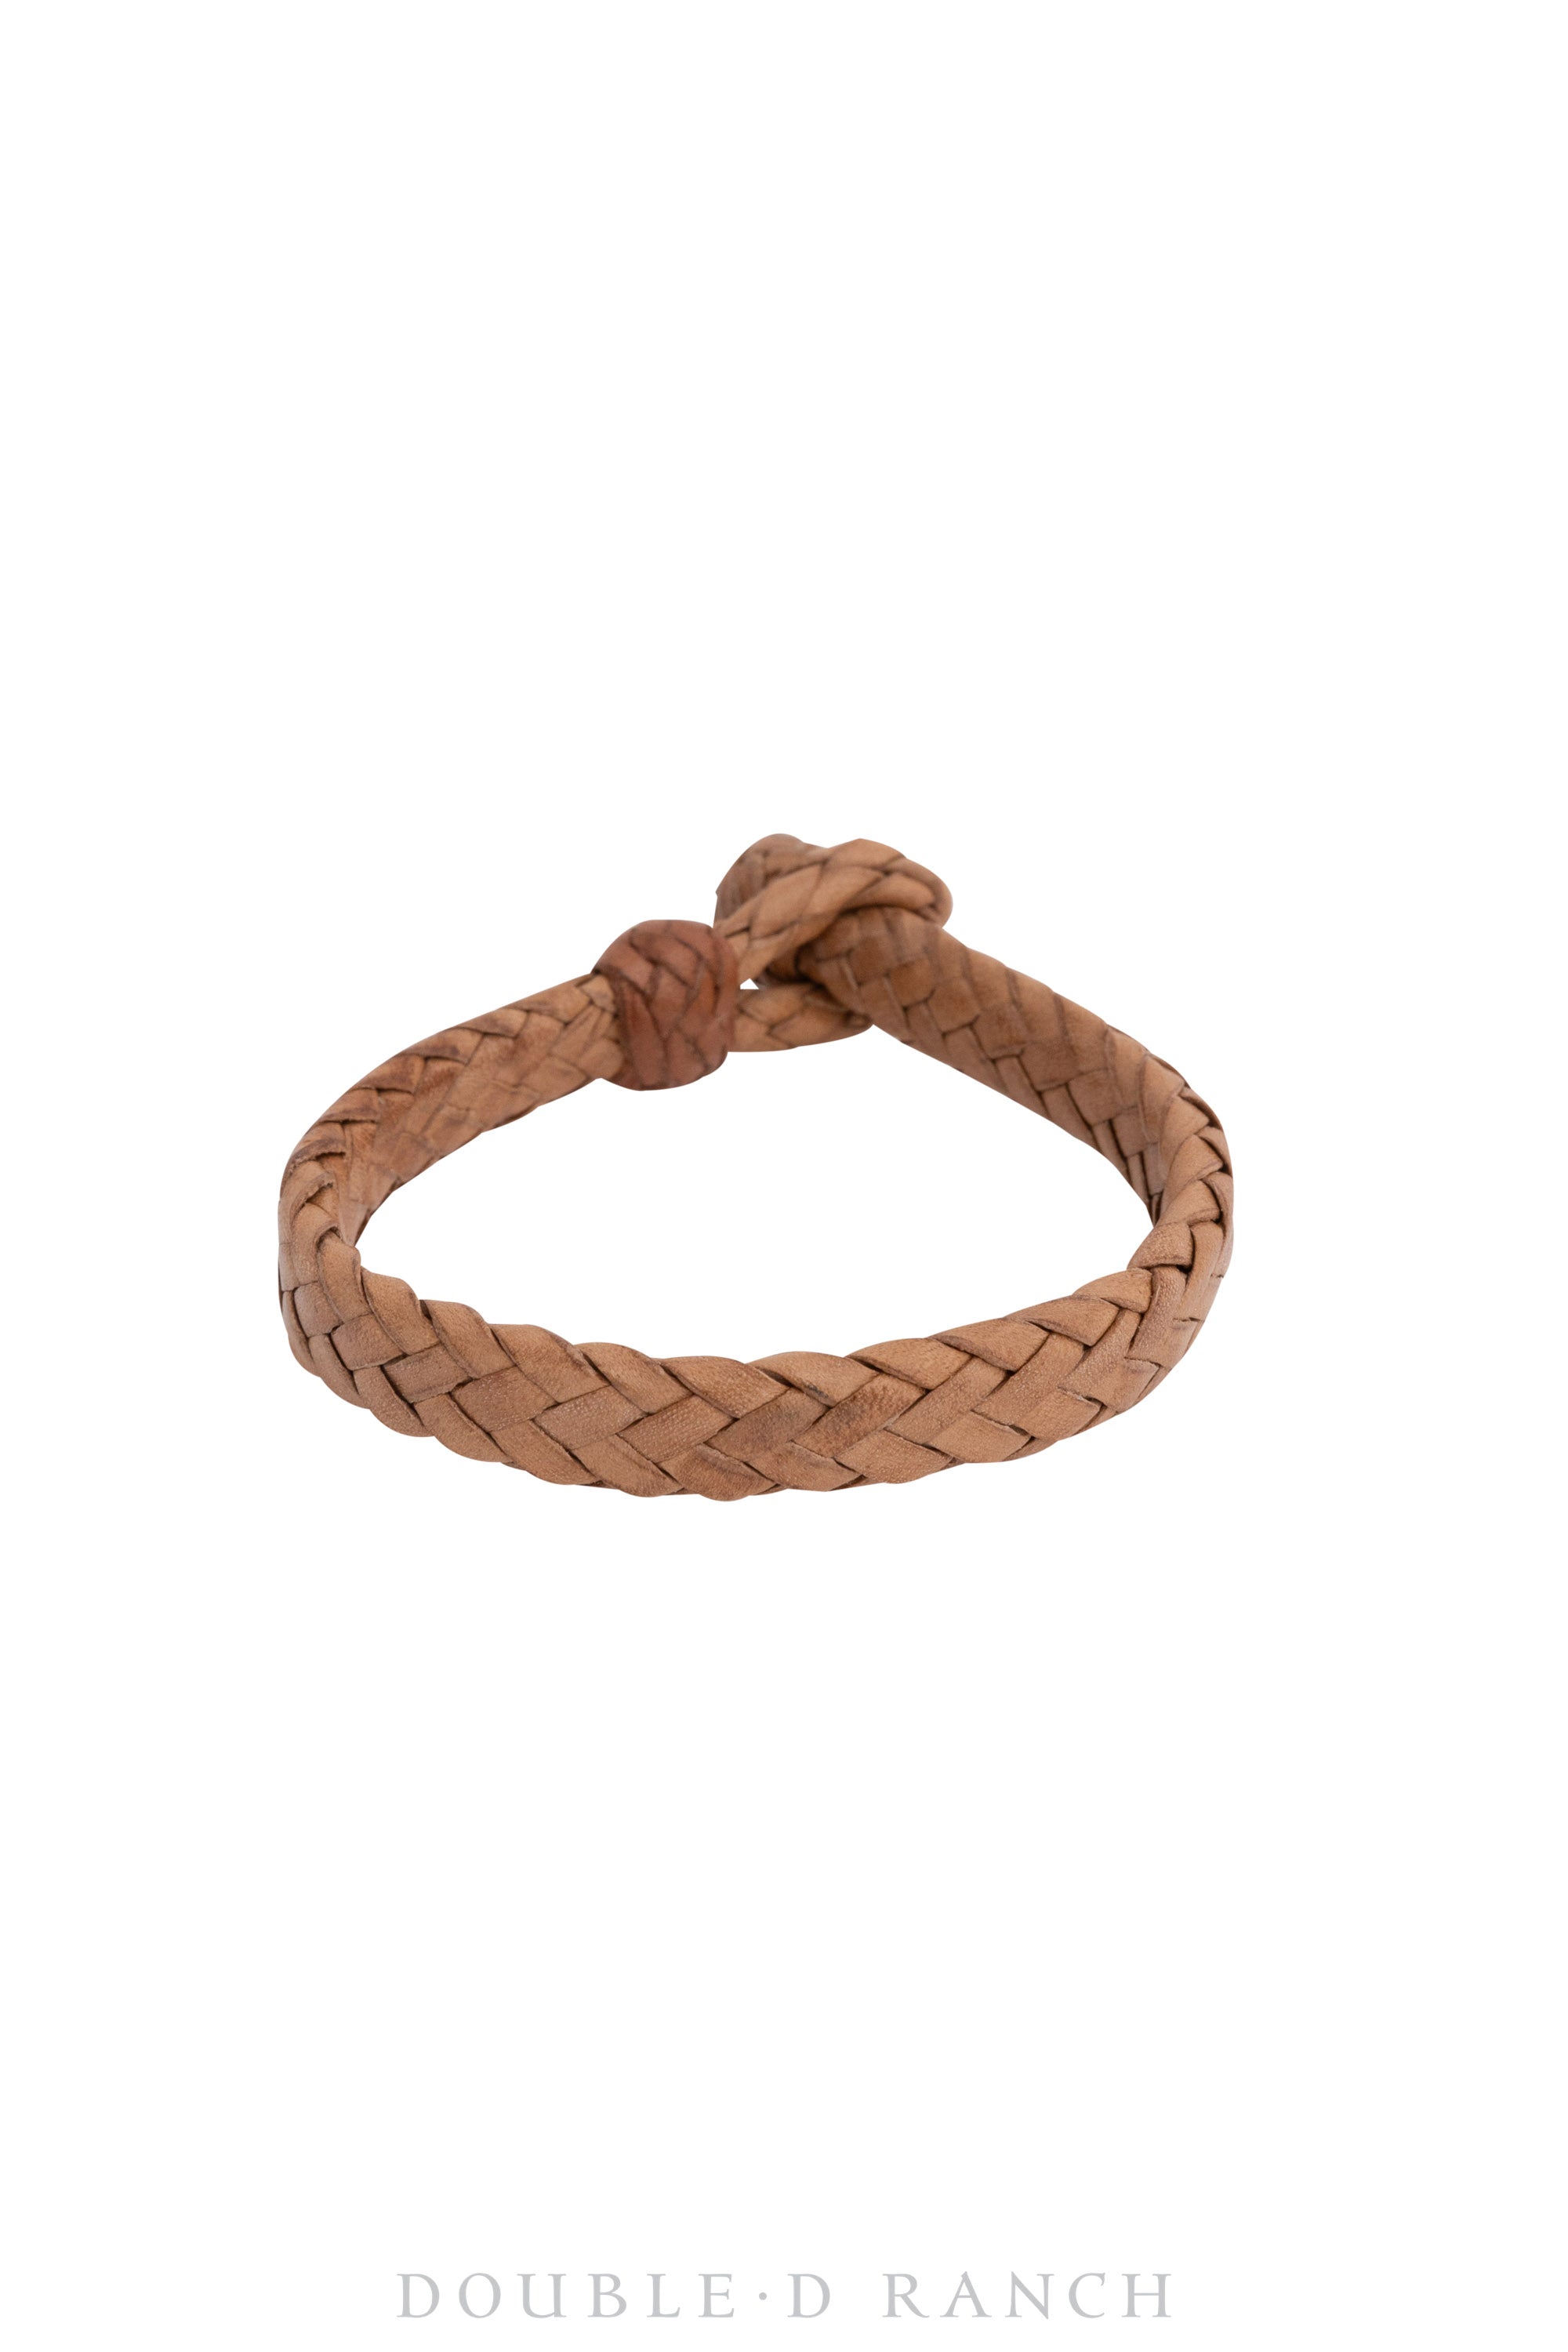 Square Braided Leather Wrap Bracelet, Light Tan Brown